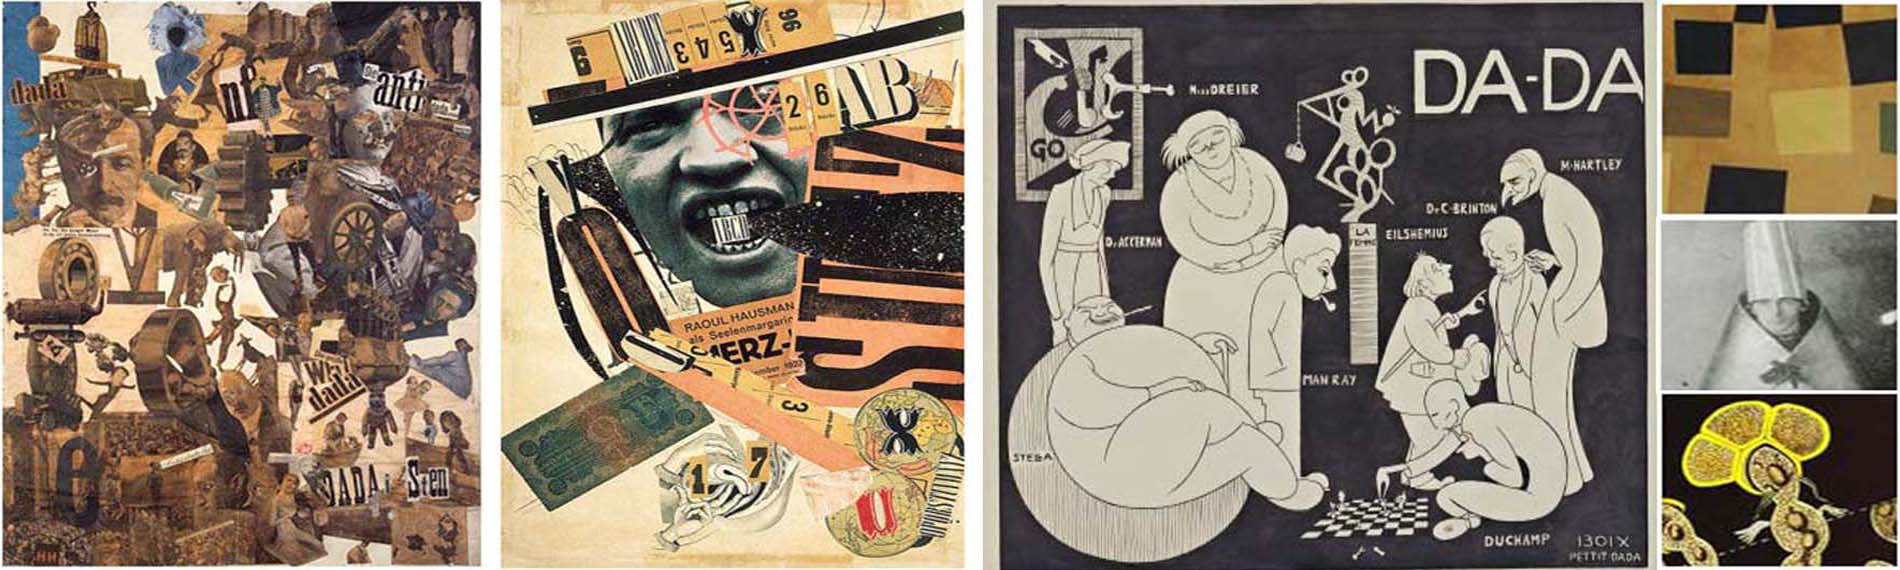 Vintage Avant-Garde Dada Poster 1921 Da-Da New York Dada Group RICHARD BOIX